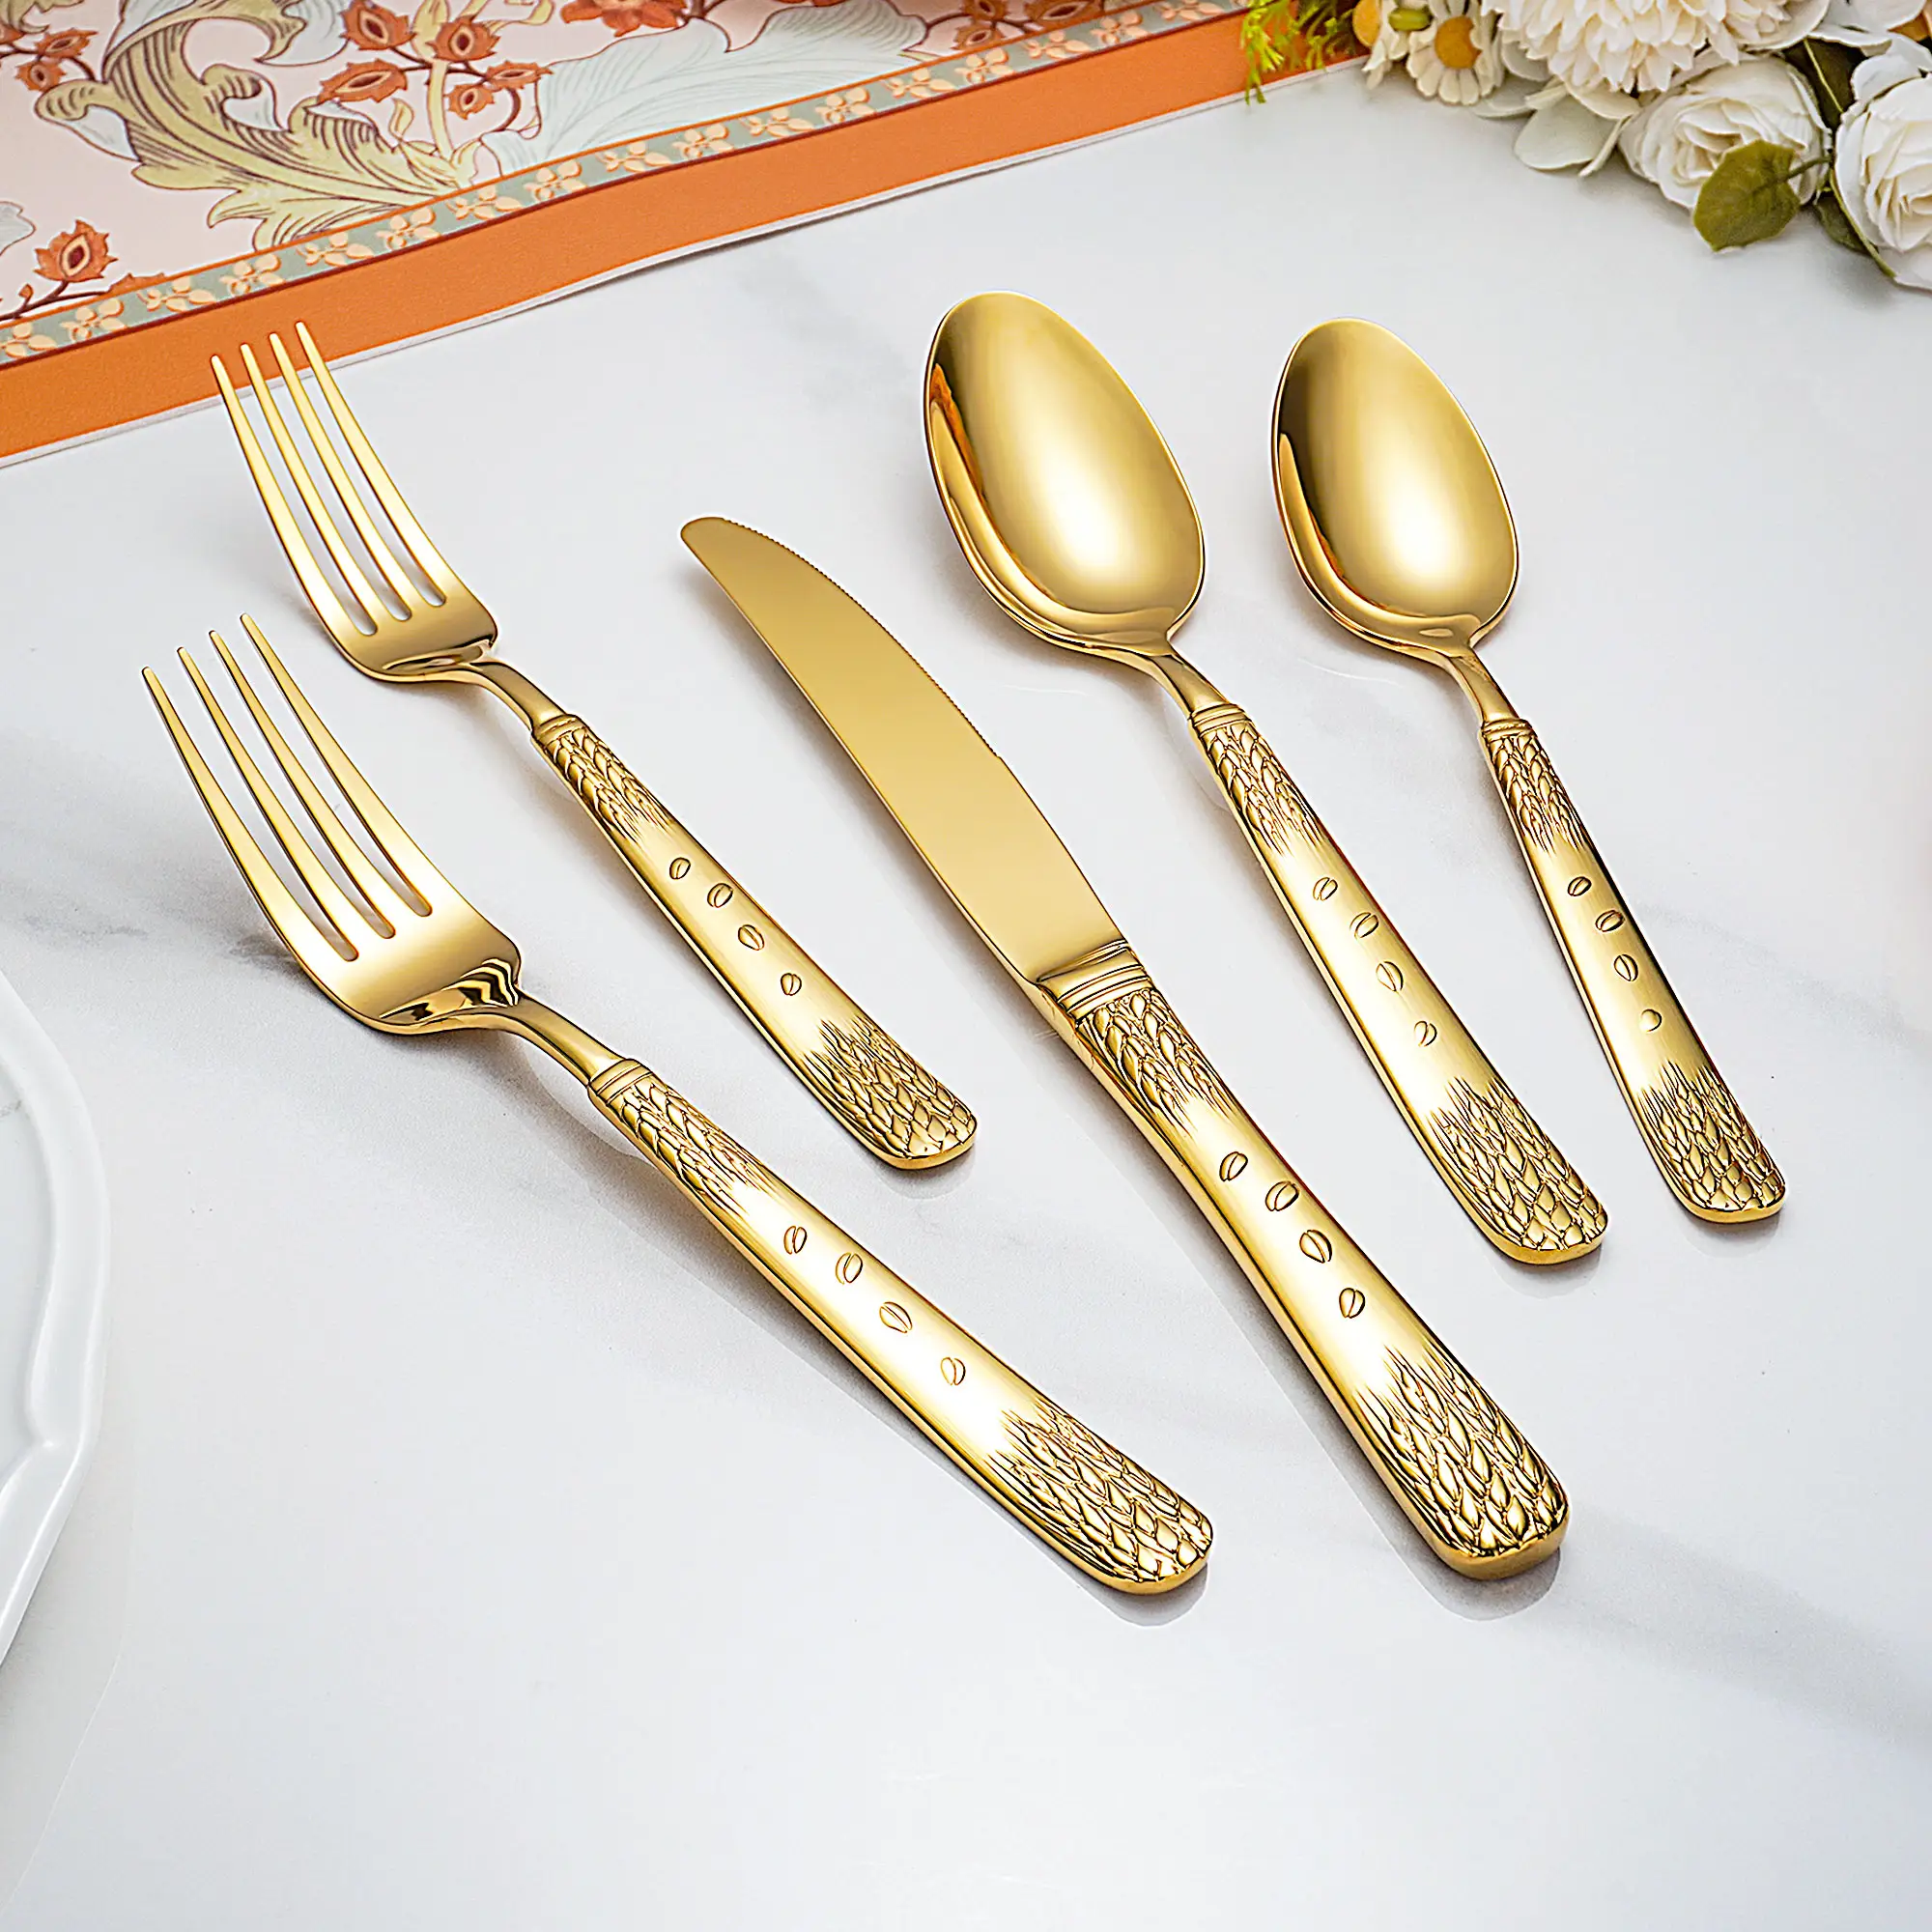 Vintage Wheat Embossed Handle Wedding Silverware Knife Fork And Spoon Flatware Stainless Steel Gold Cutlery Set